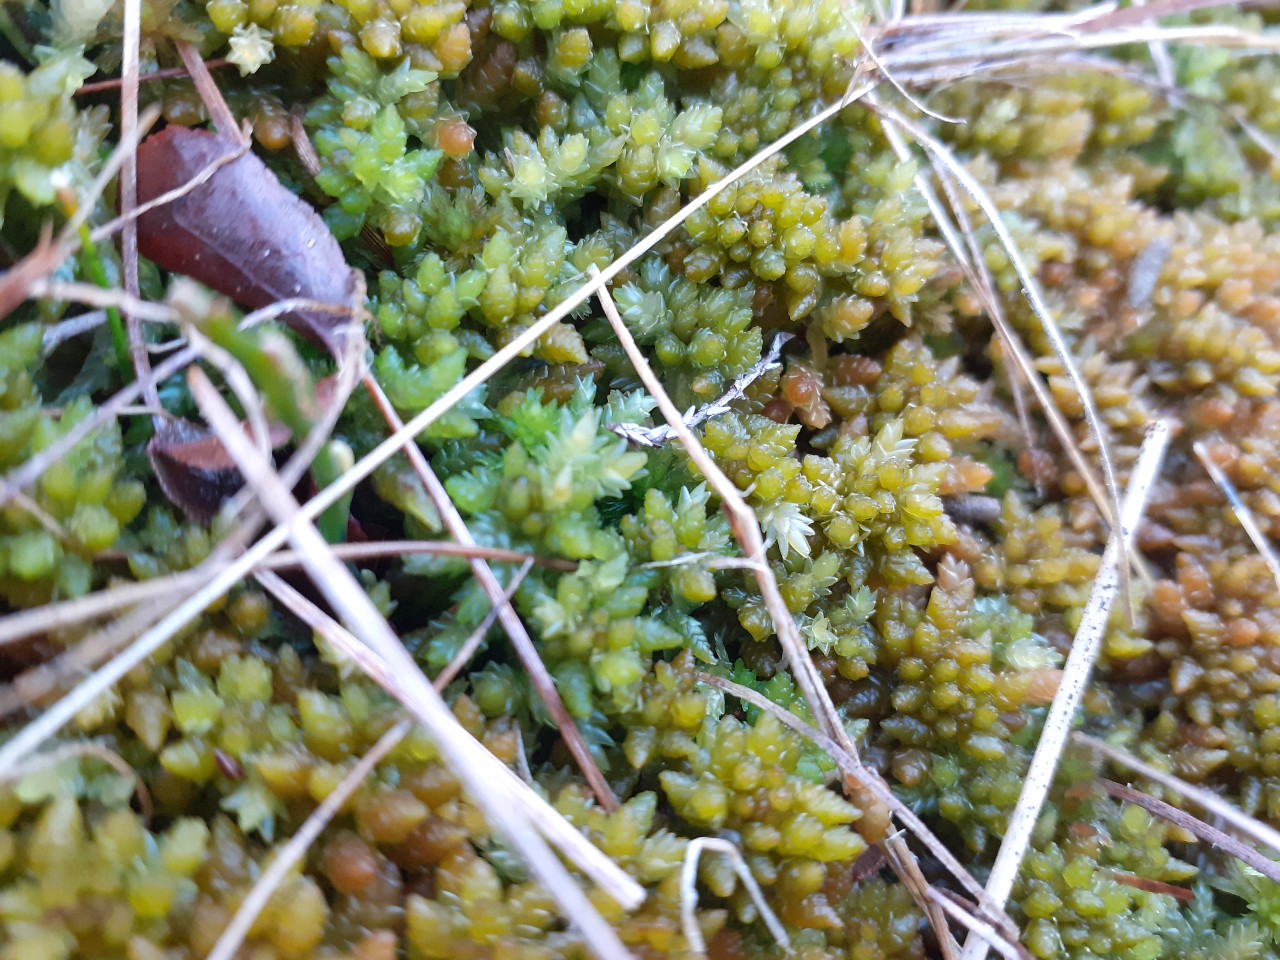 Green sphagnum moss